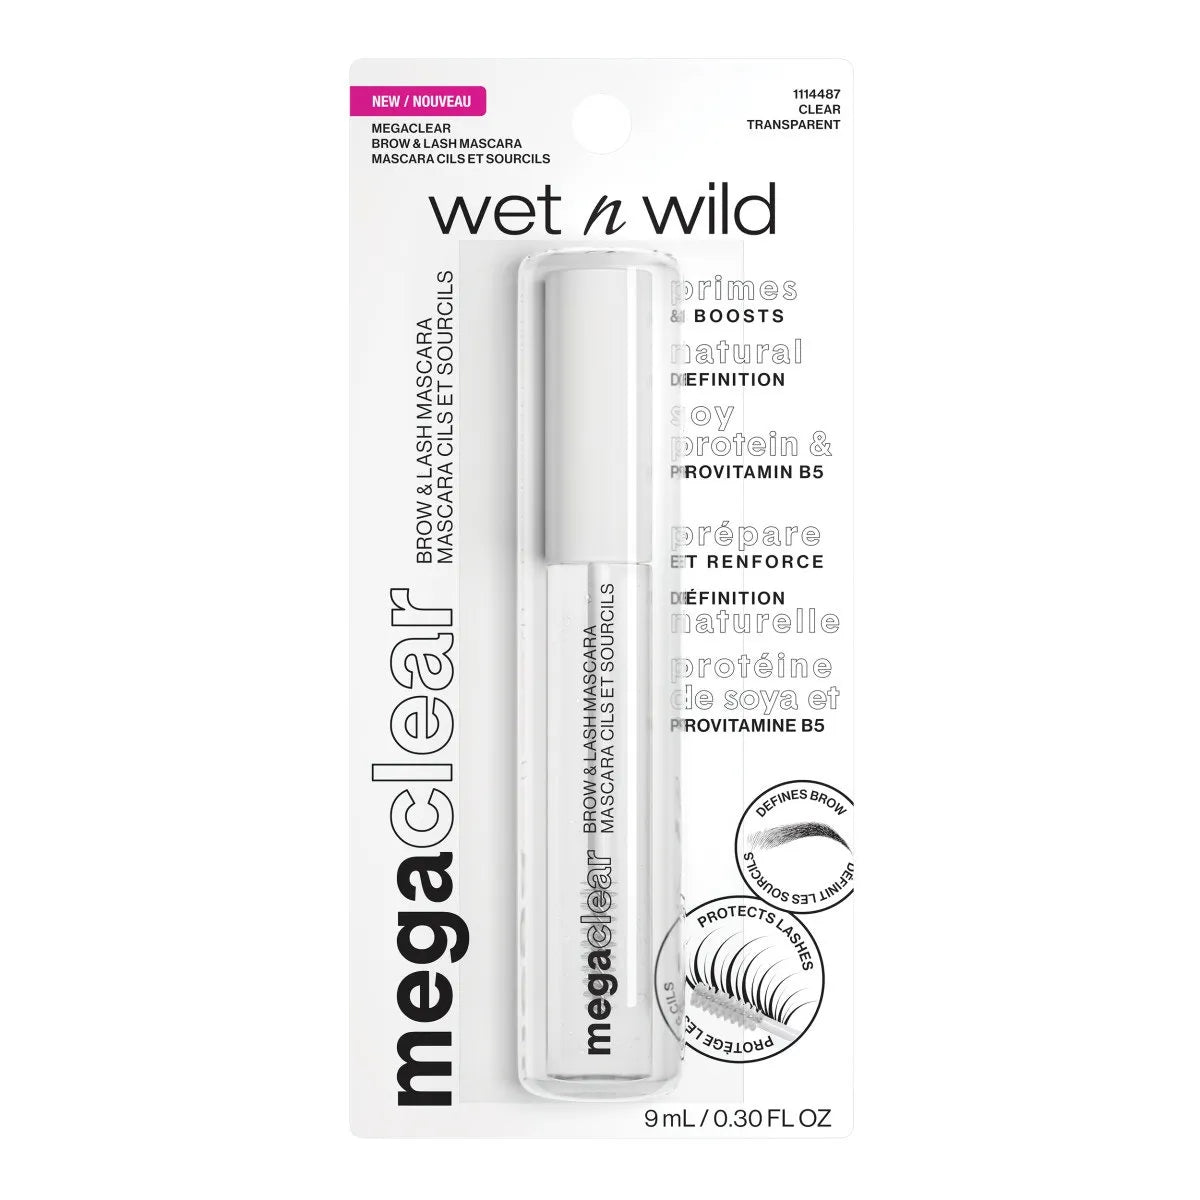 Wet n Wild MEGA CLEAR BROW & LASH MASCARA BROW & LASH MASCARA Volare Makeup   